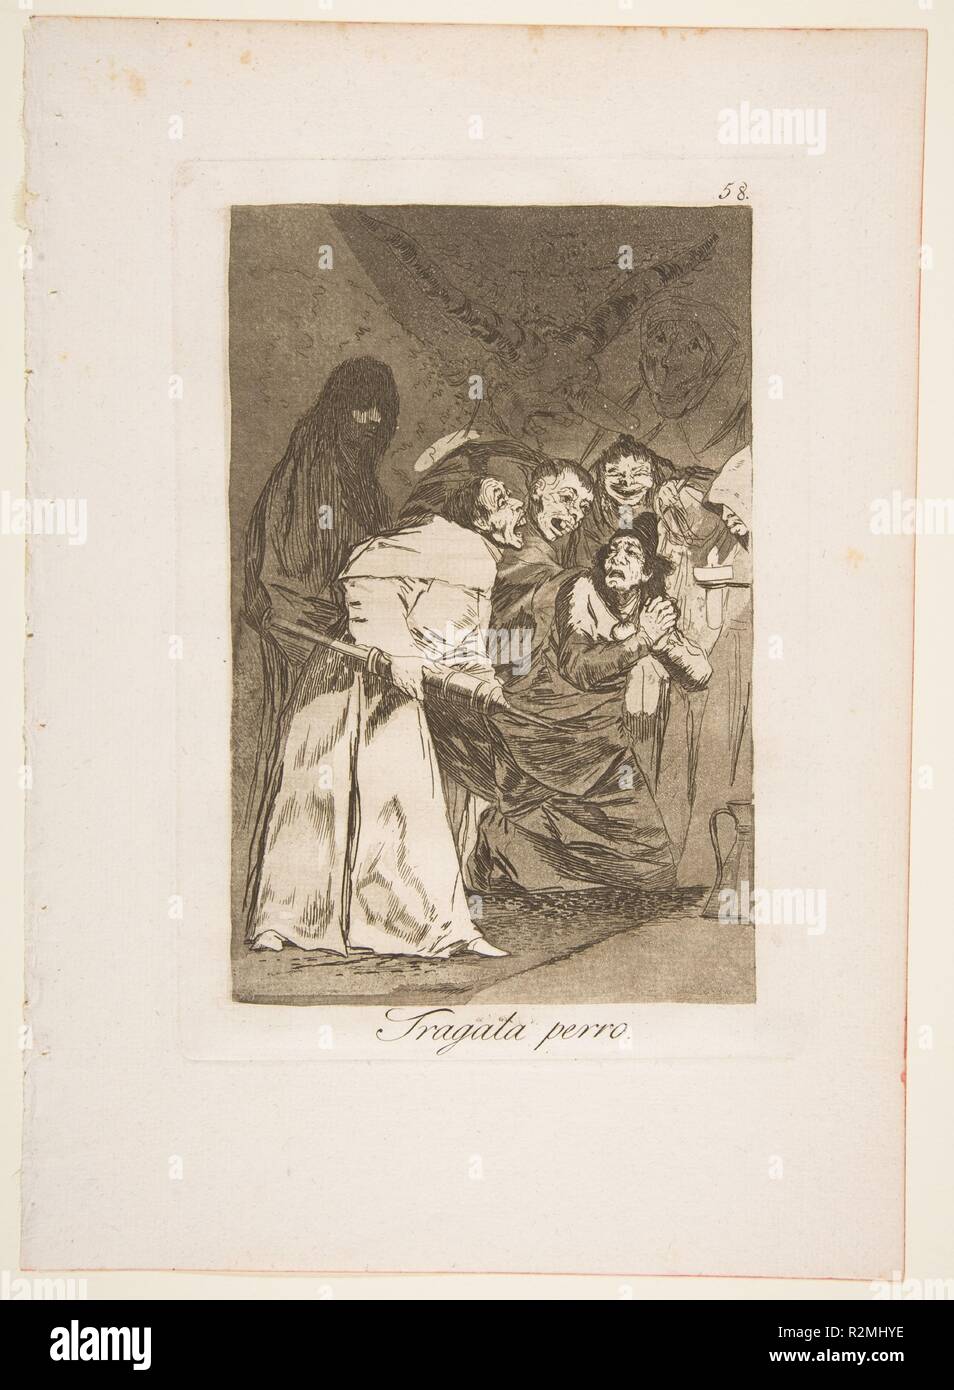 58 Plaque de "Los Caprichos" : l'avaler, le chien (Tragala perro.). Artiste : Goya (Francisco de Goya y Lucientes (Fuendetodos) espagnol, 1746-1828 Bordeaux). Dimensions : Plaque : 8 × 5 7/16 15/16 in. (21,5 × 15,1 cm) feuille : 11 5/8 x 8 1/4 in. (29,5 x 20,9 cm). Series/portefeuille : Los Caprichos. Date : 1799. Musée : Metropolitan Museum of Art, New York, USA. Banque D'Images